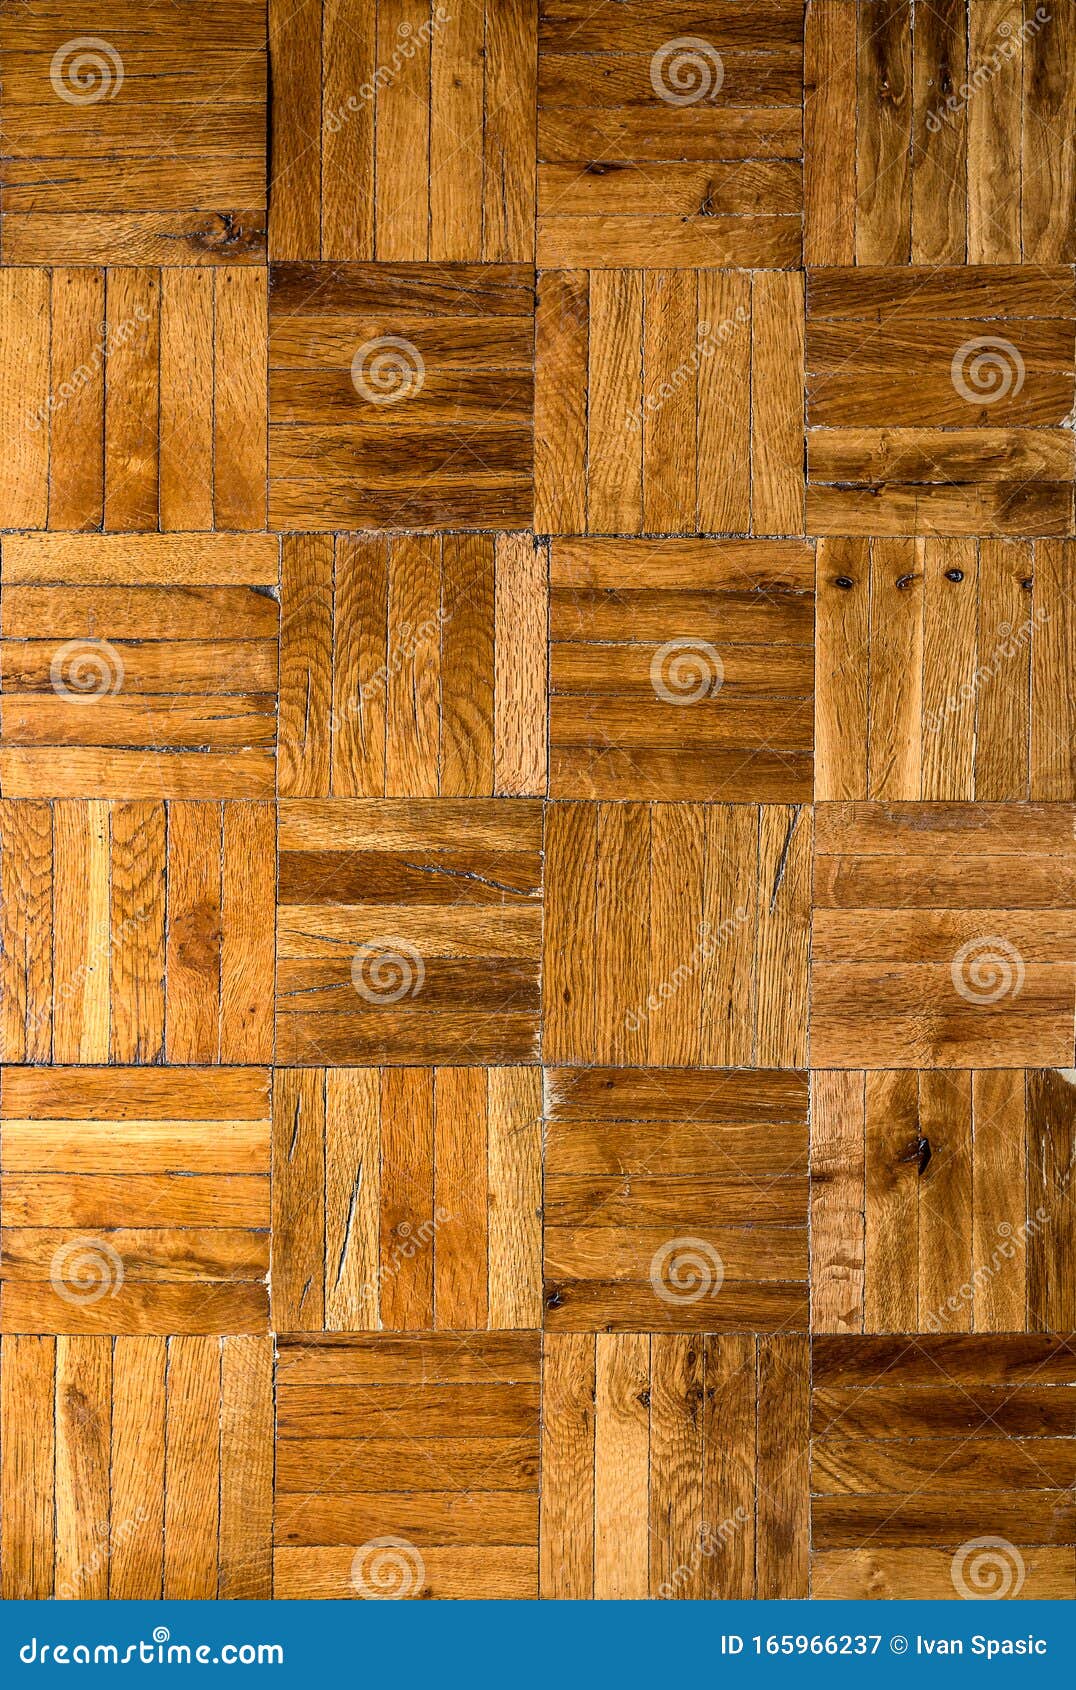 Old Wooden Parquet Floor Background Stock Image Image Of Grain